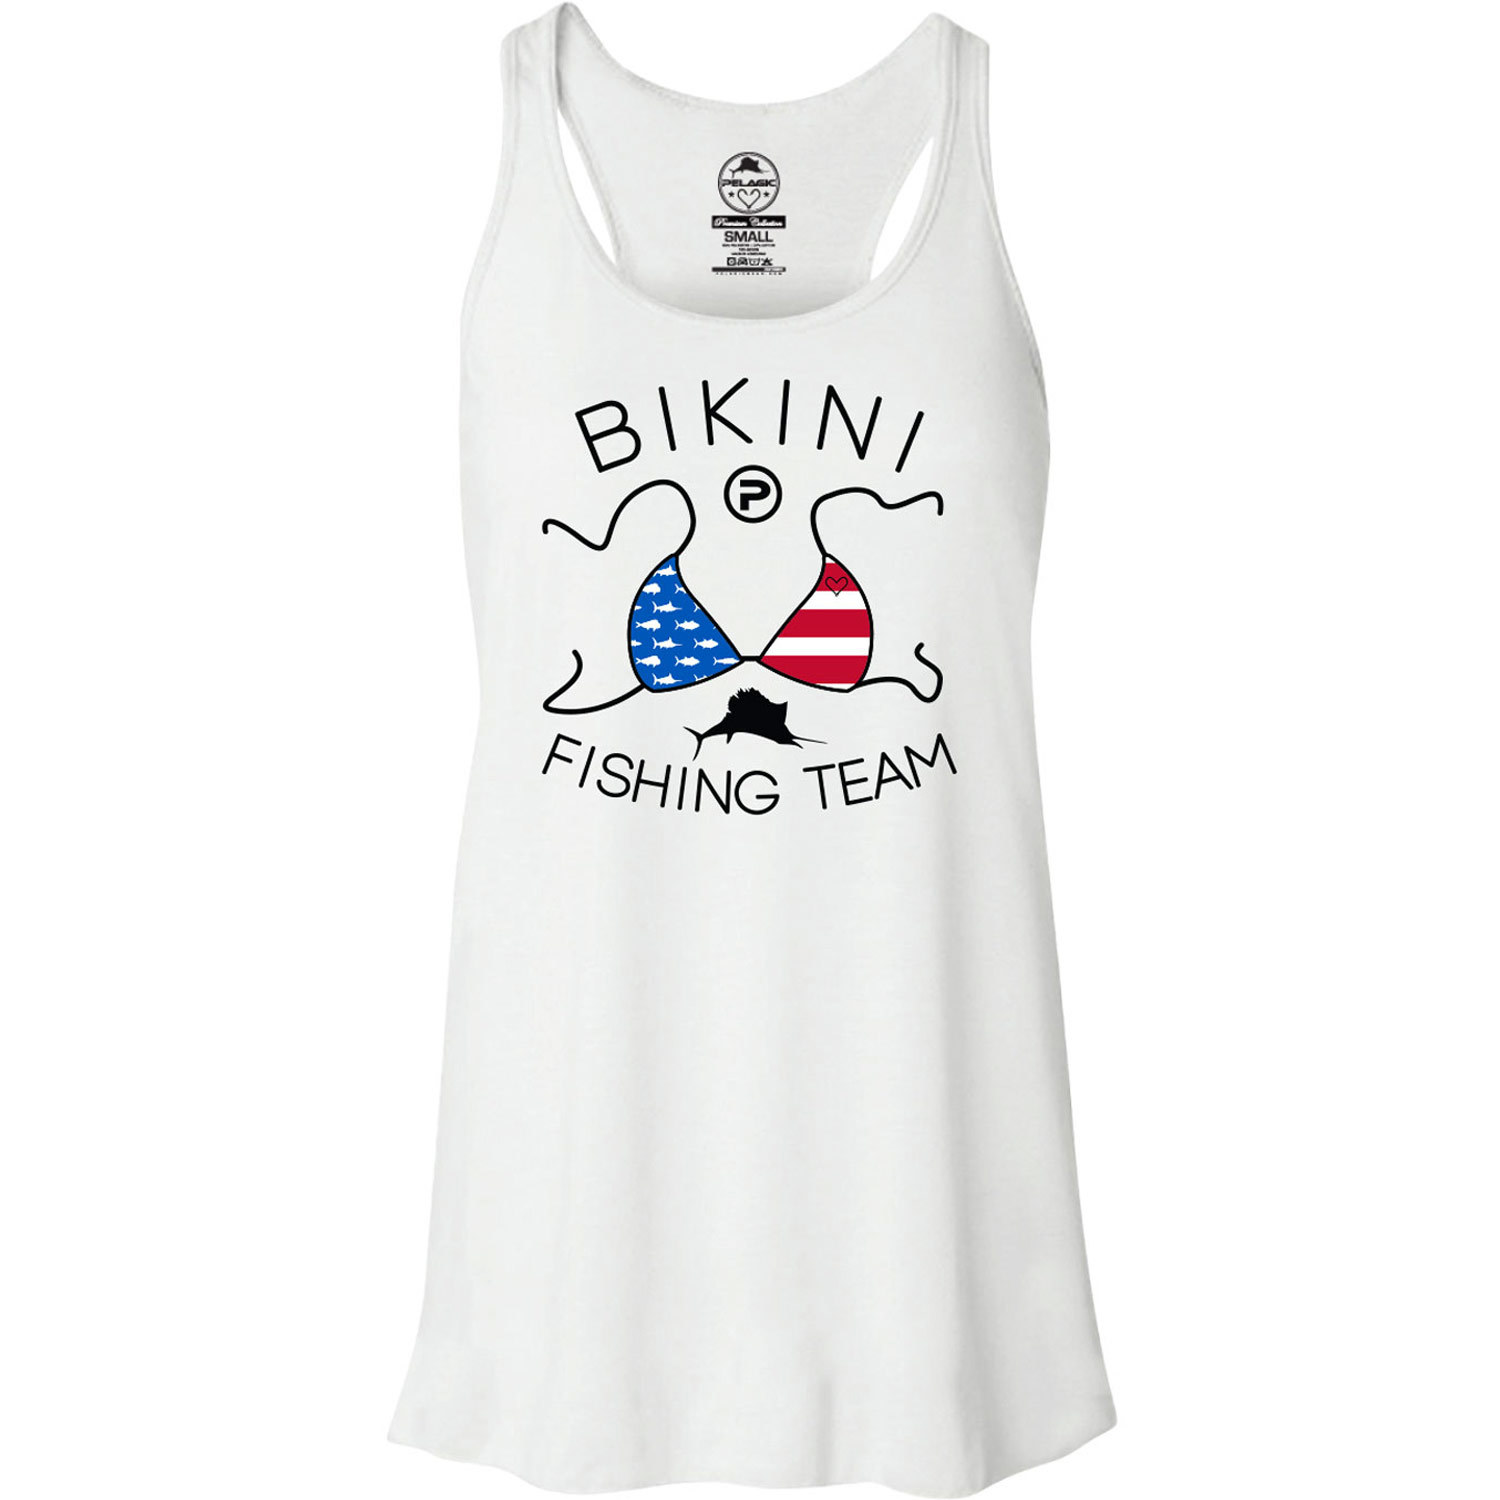 PELAGIC Women's Bikini Fishing Team Tank Top